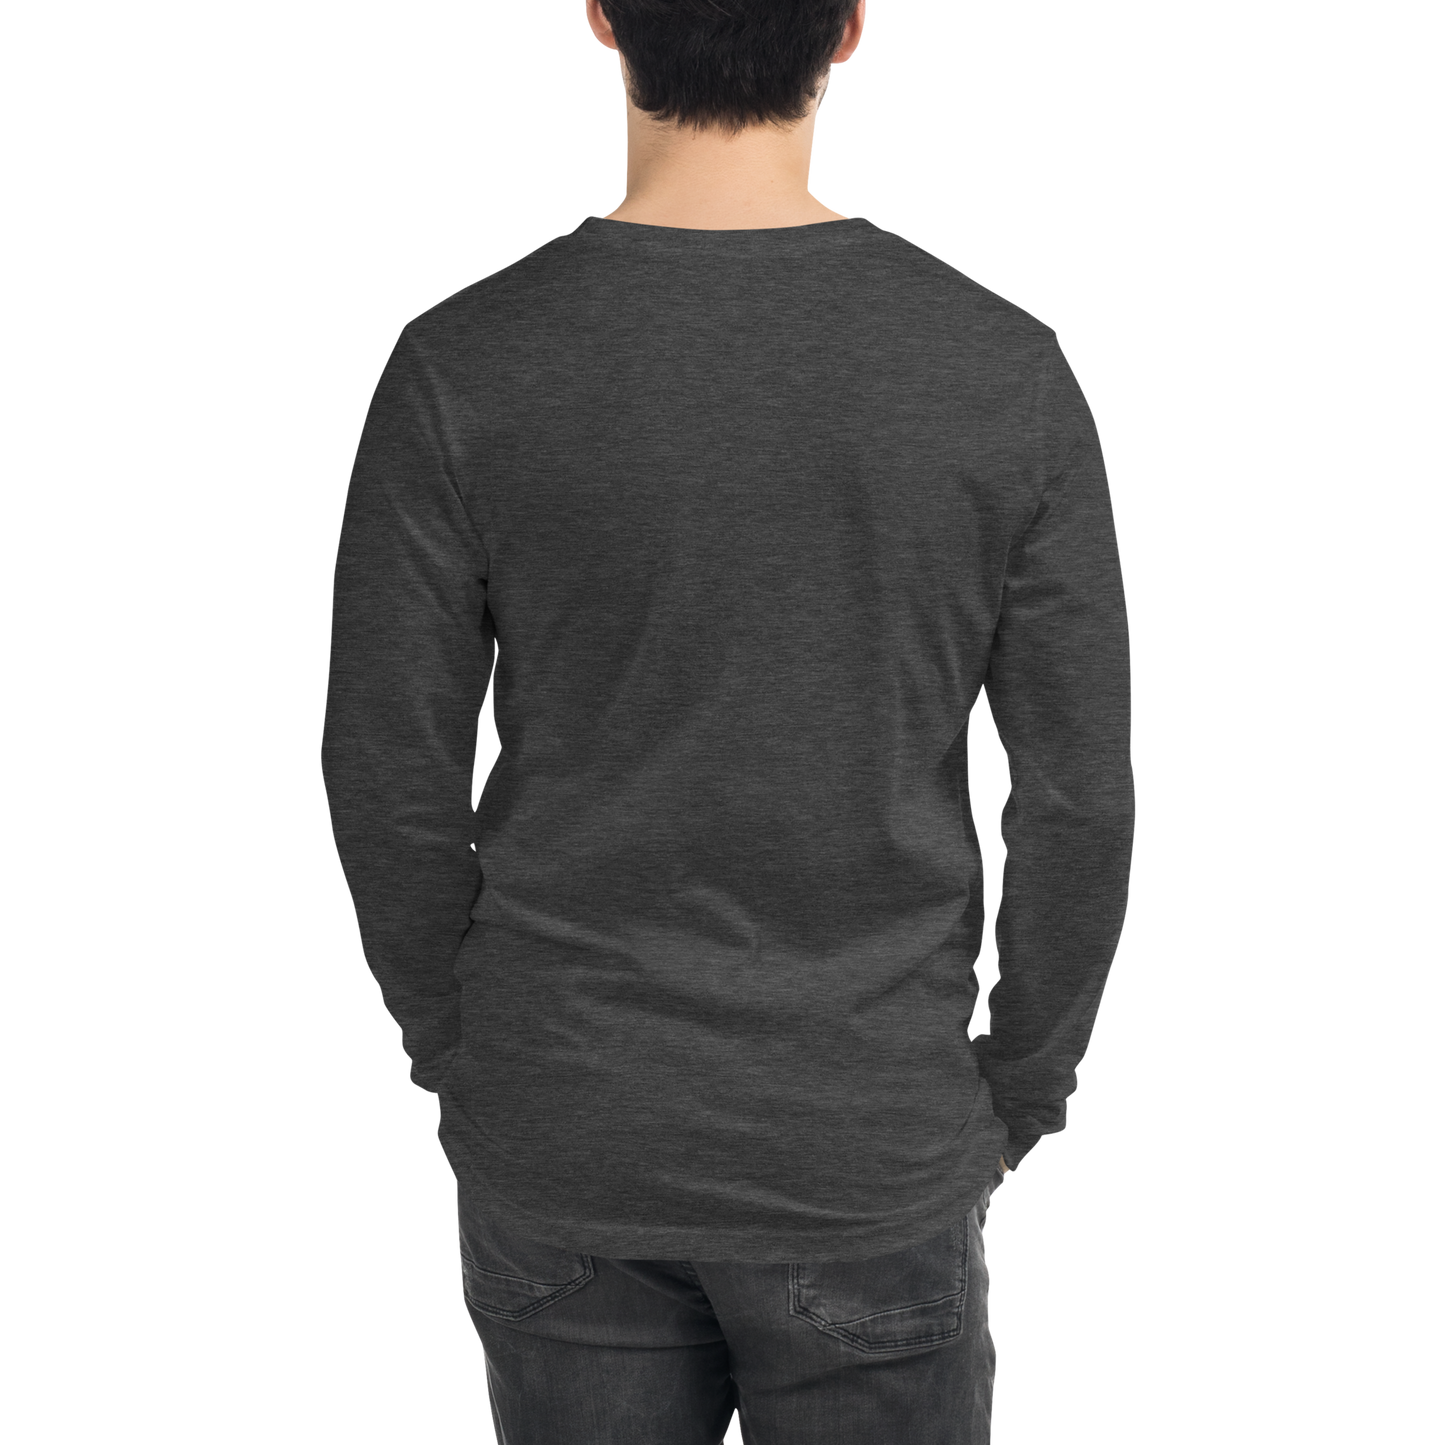 Michigan 'Native' T-Shirt (Licence Plate Font) | Unisex Long Sleeve